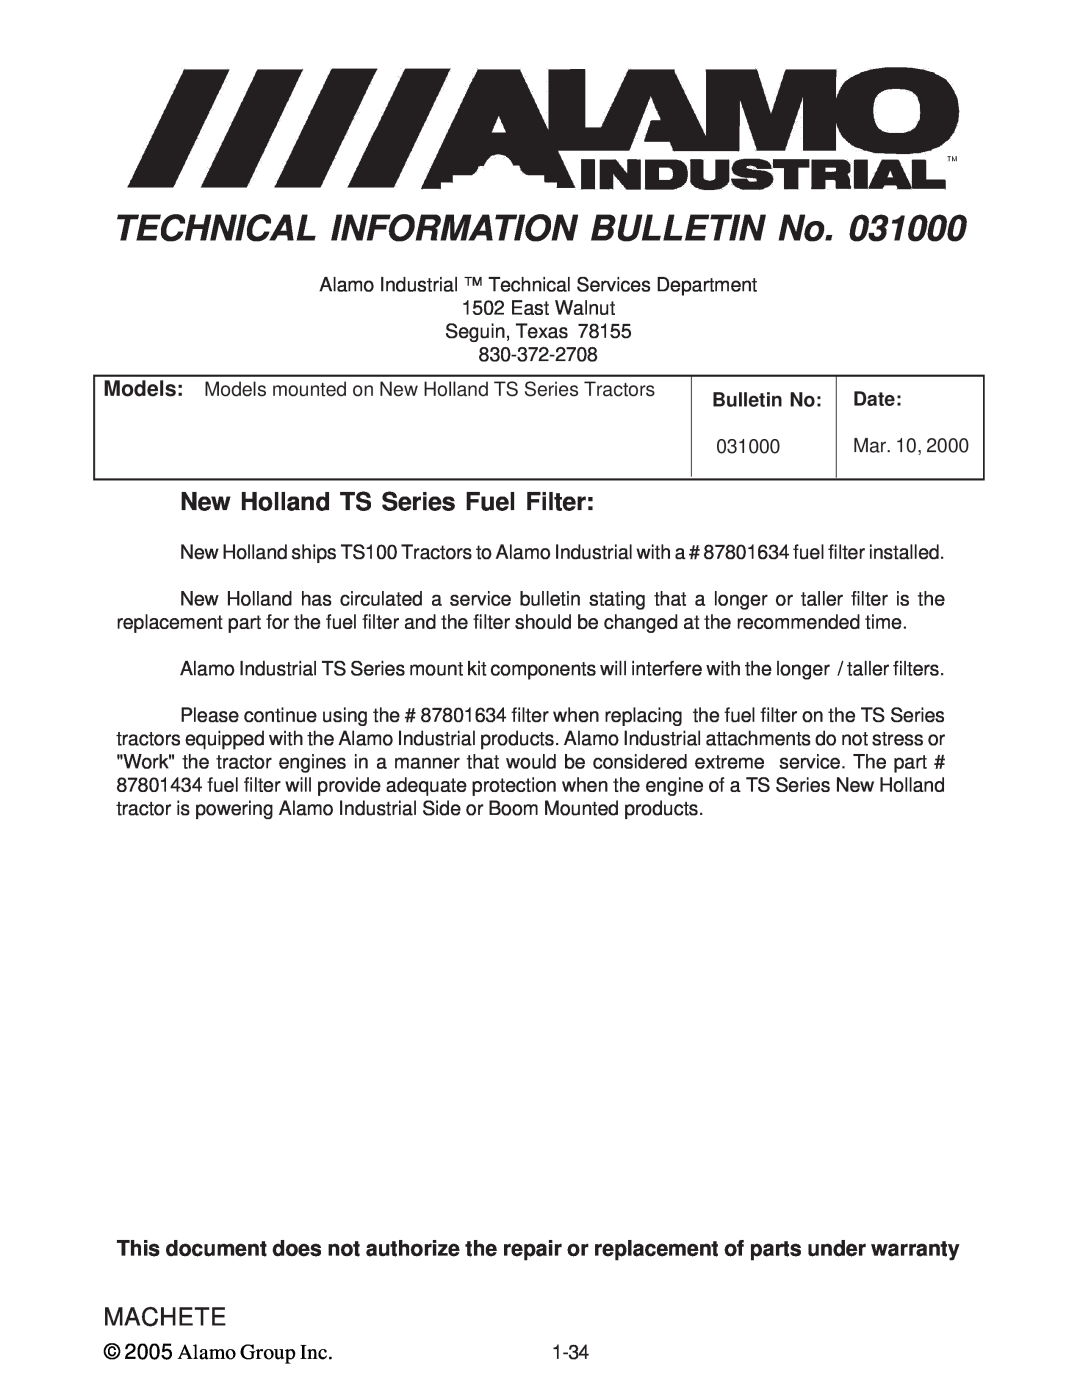 Alamo T 7740 New Holland TS Series Fuel Filter, TECHNICAL INFORMATION BULLETIN No, Machete, Alamo Group Inc, Bulletin No 